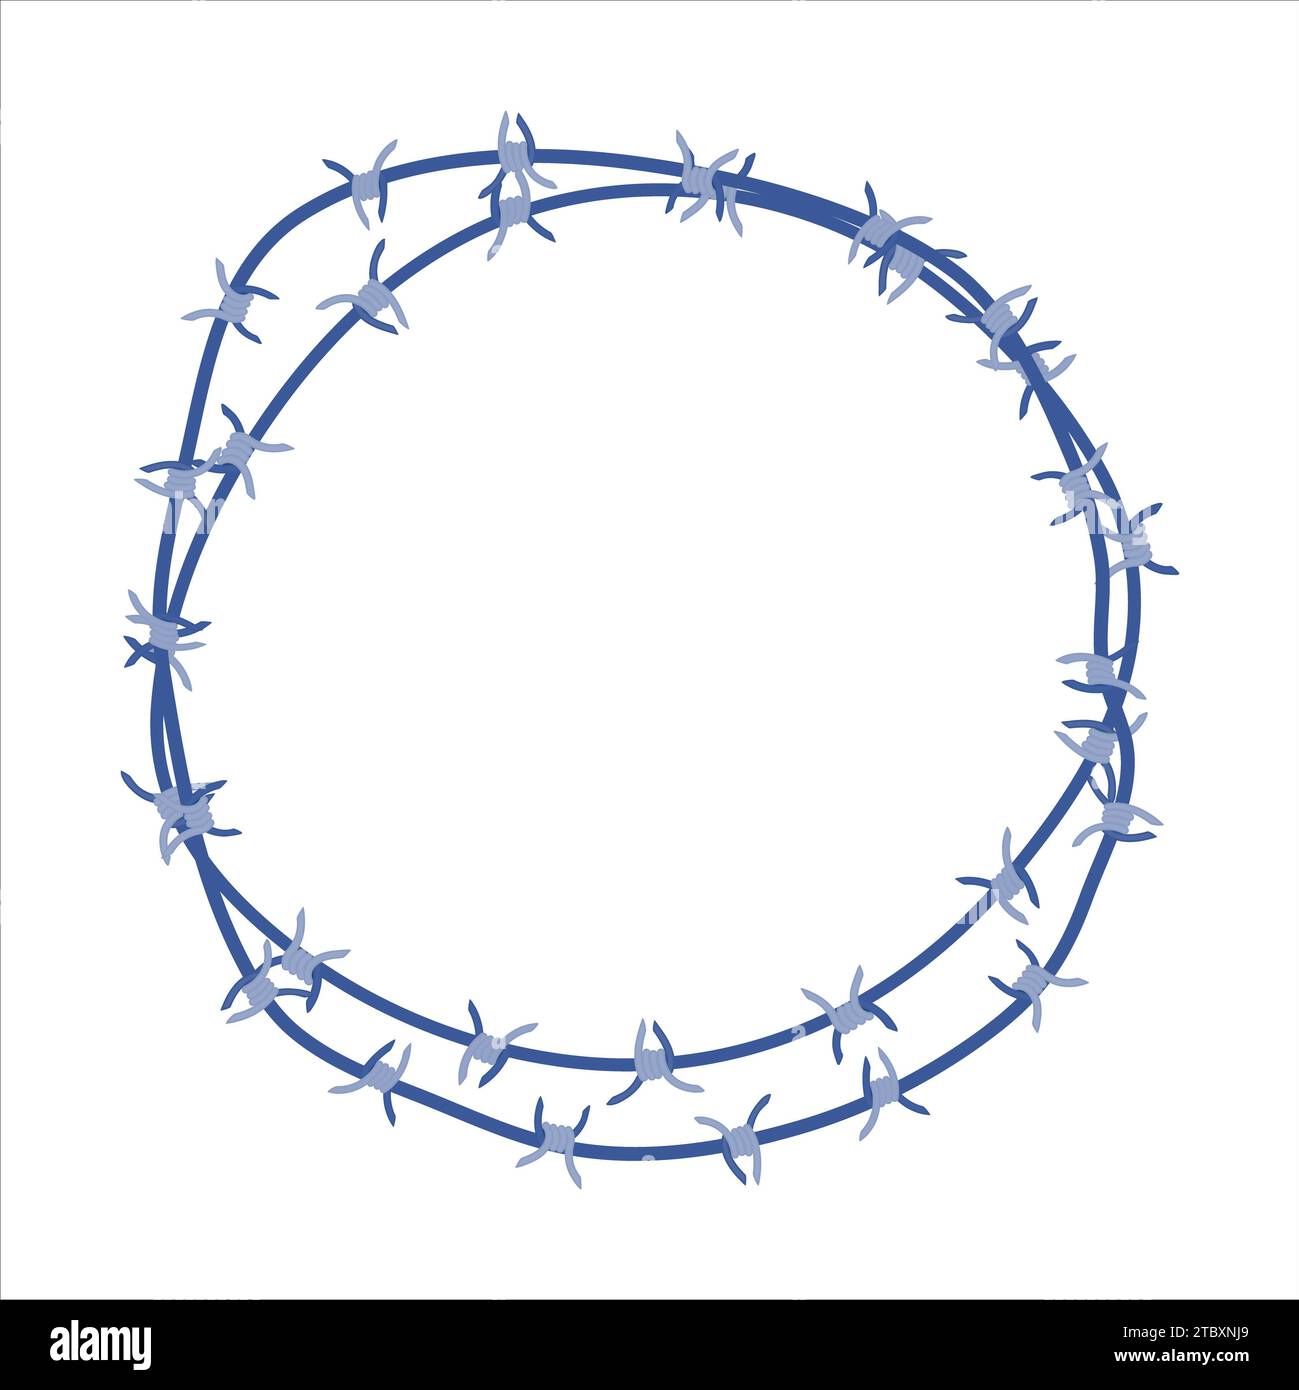 Barbed wire, conceptual illustration Stock Photo